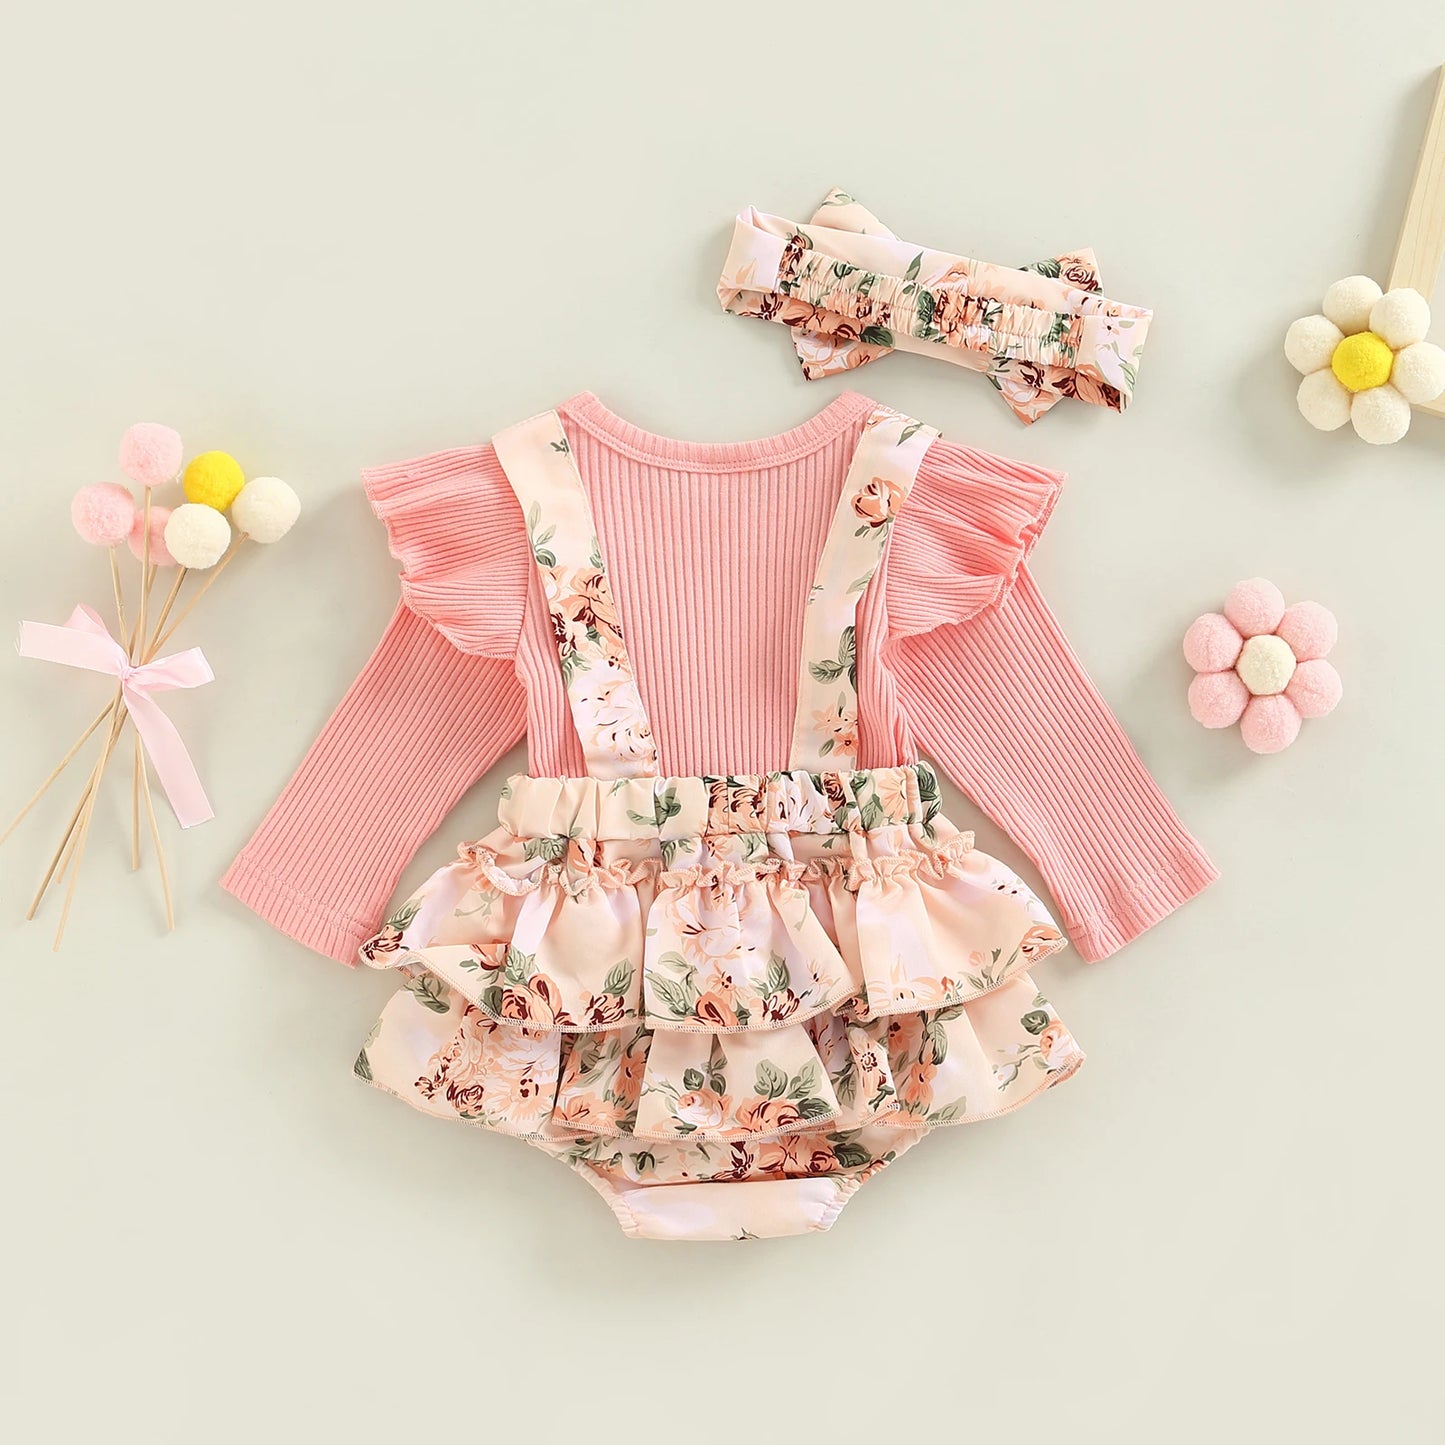 Infant Newborn Baby Girls 2Pcs Spring Autumn Outfits, Long Sleeve Romper Floral Suspender Dress + Headband Set